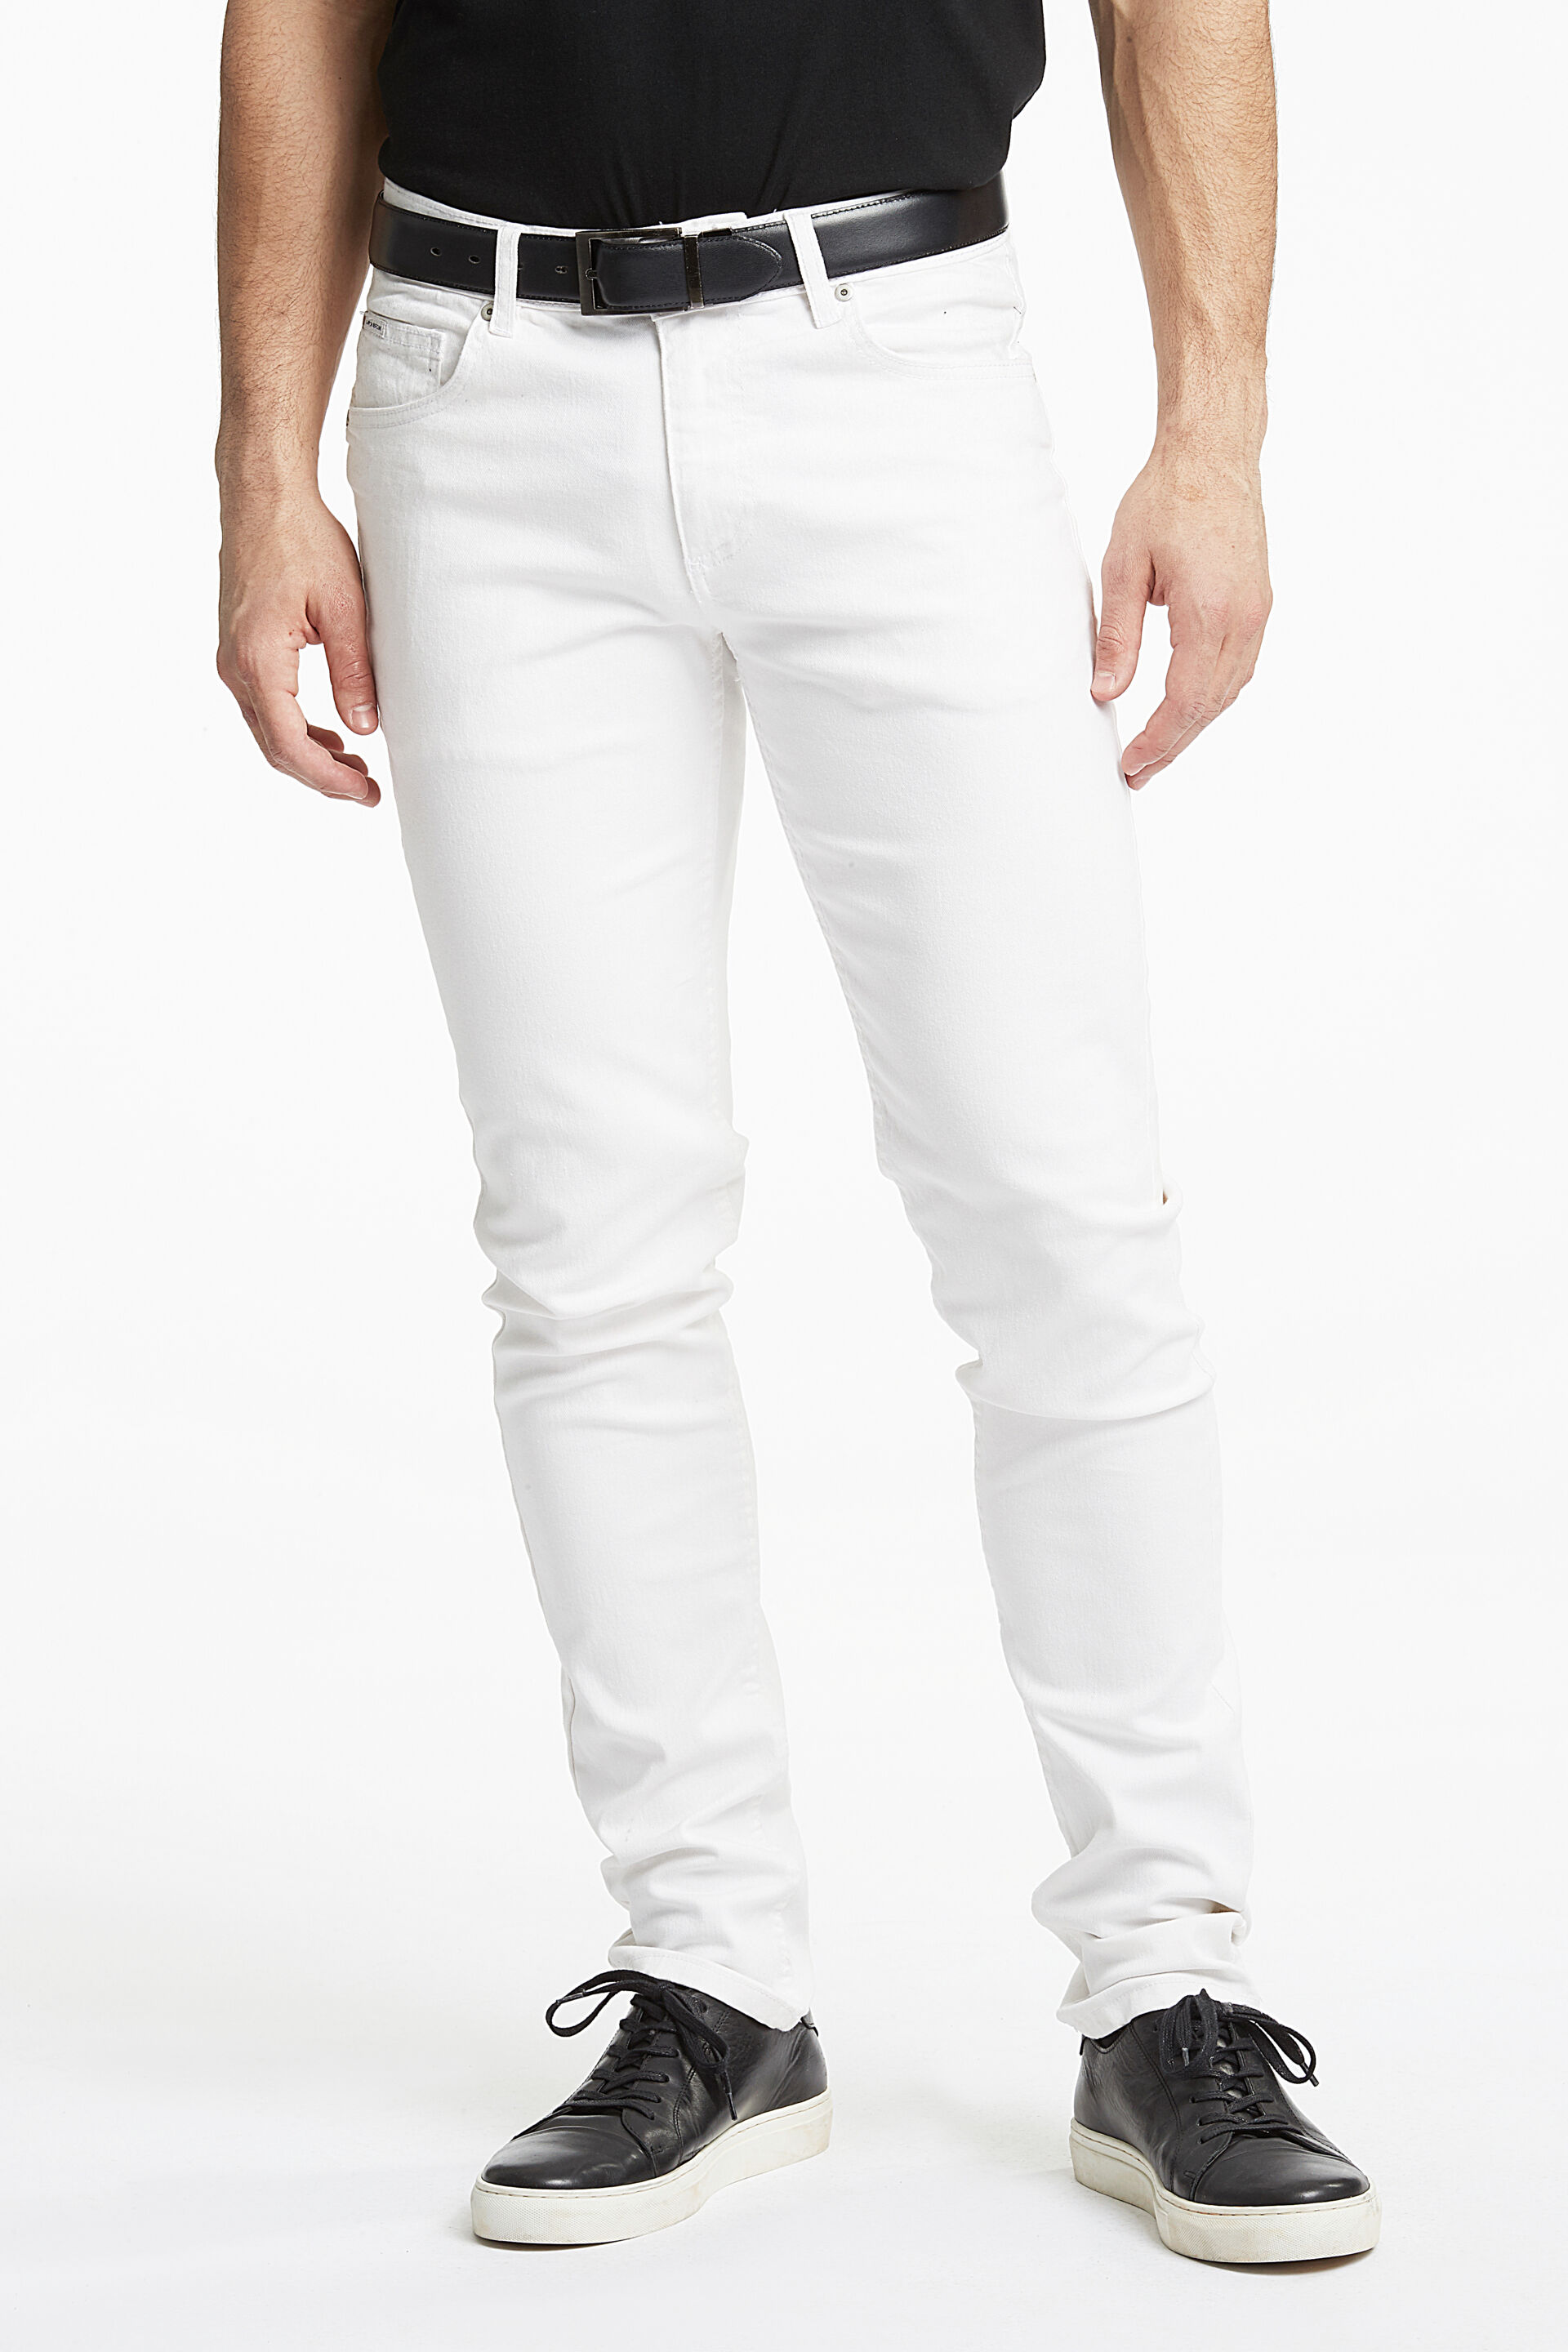 Lindbergh  Jeans Hvid 30-050002WHI